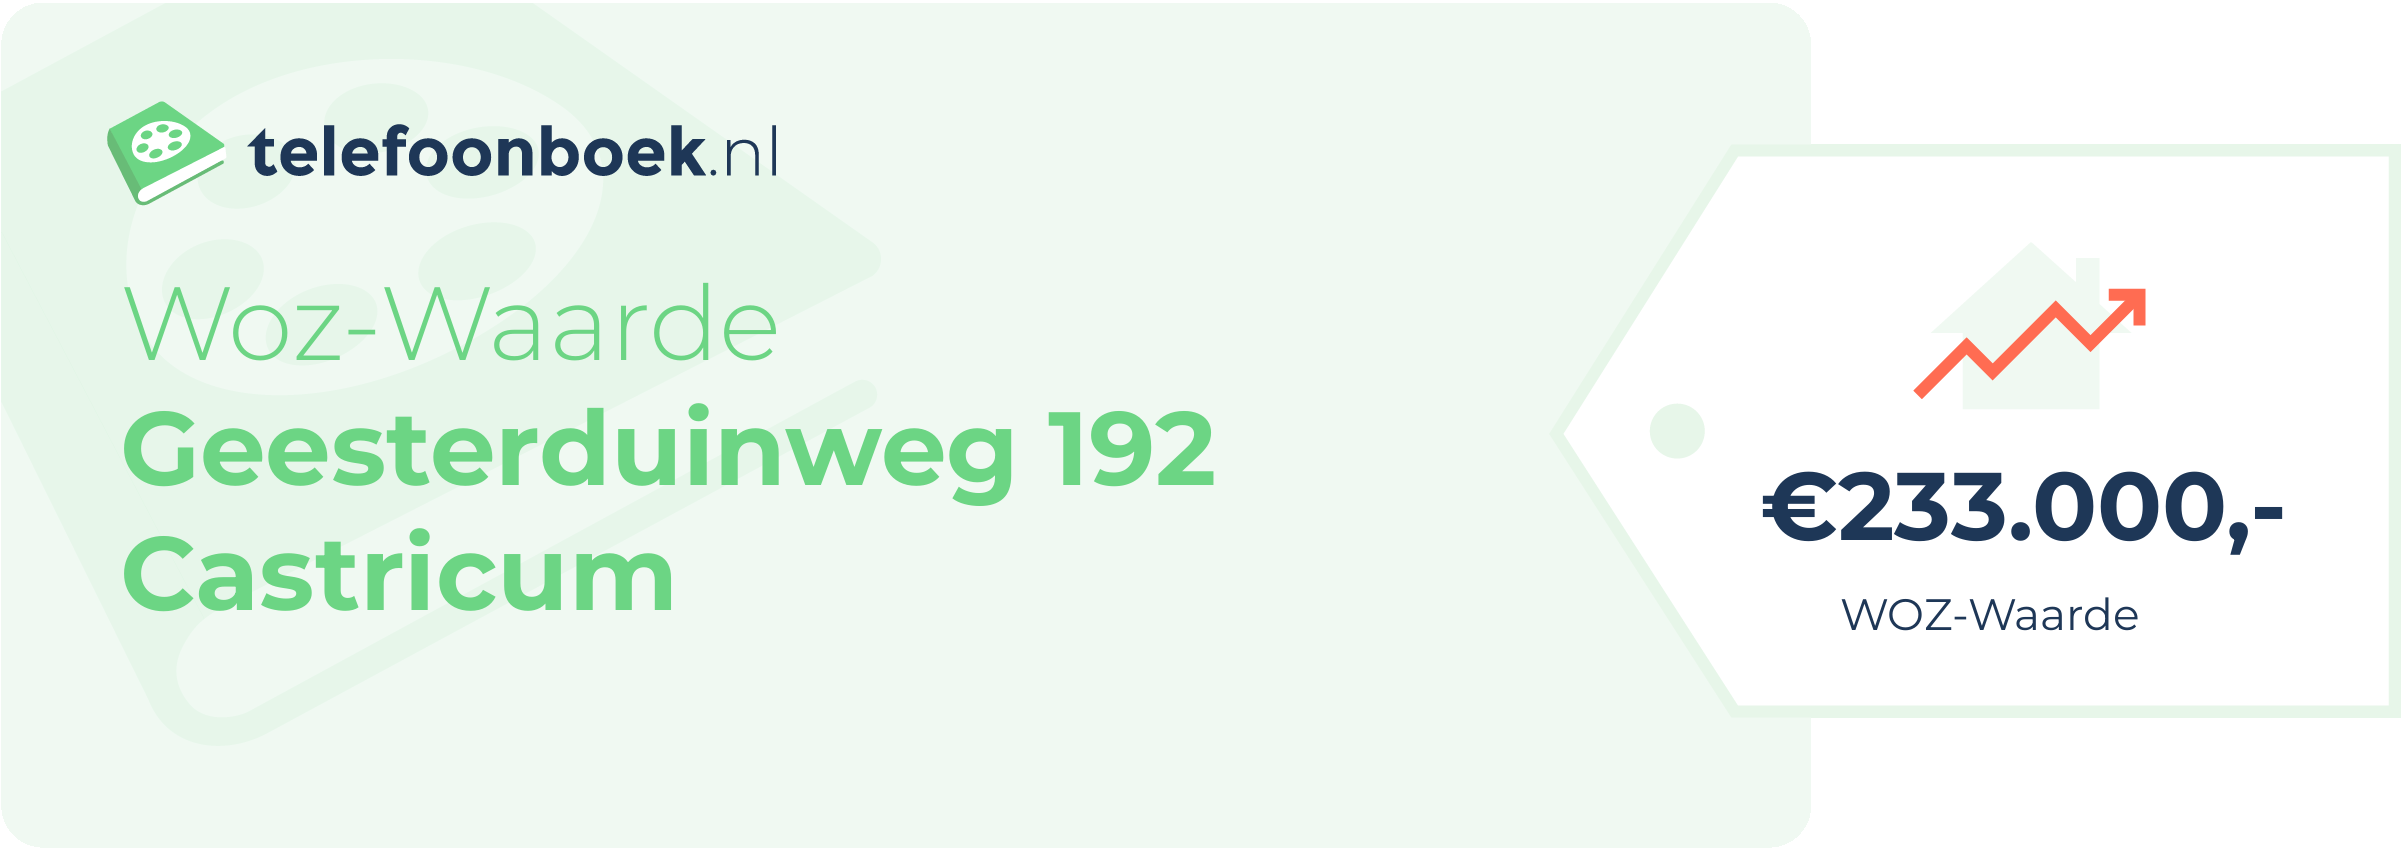 WOZ-waarde Geesterduinweg 192 Castricum